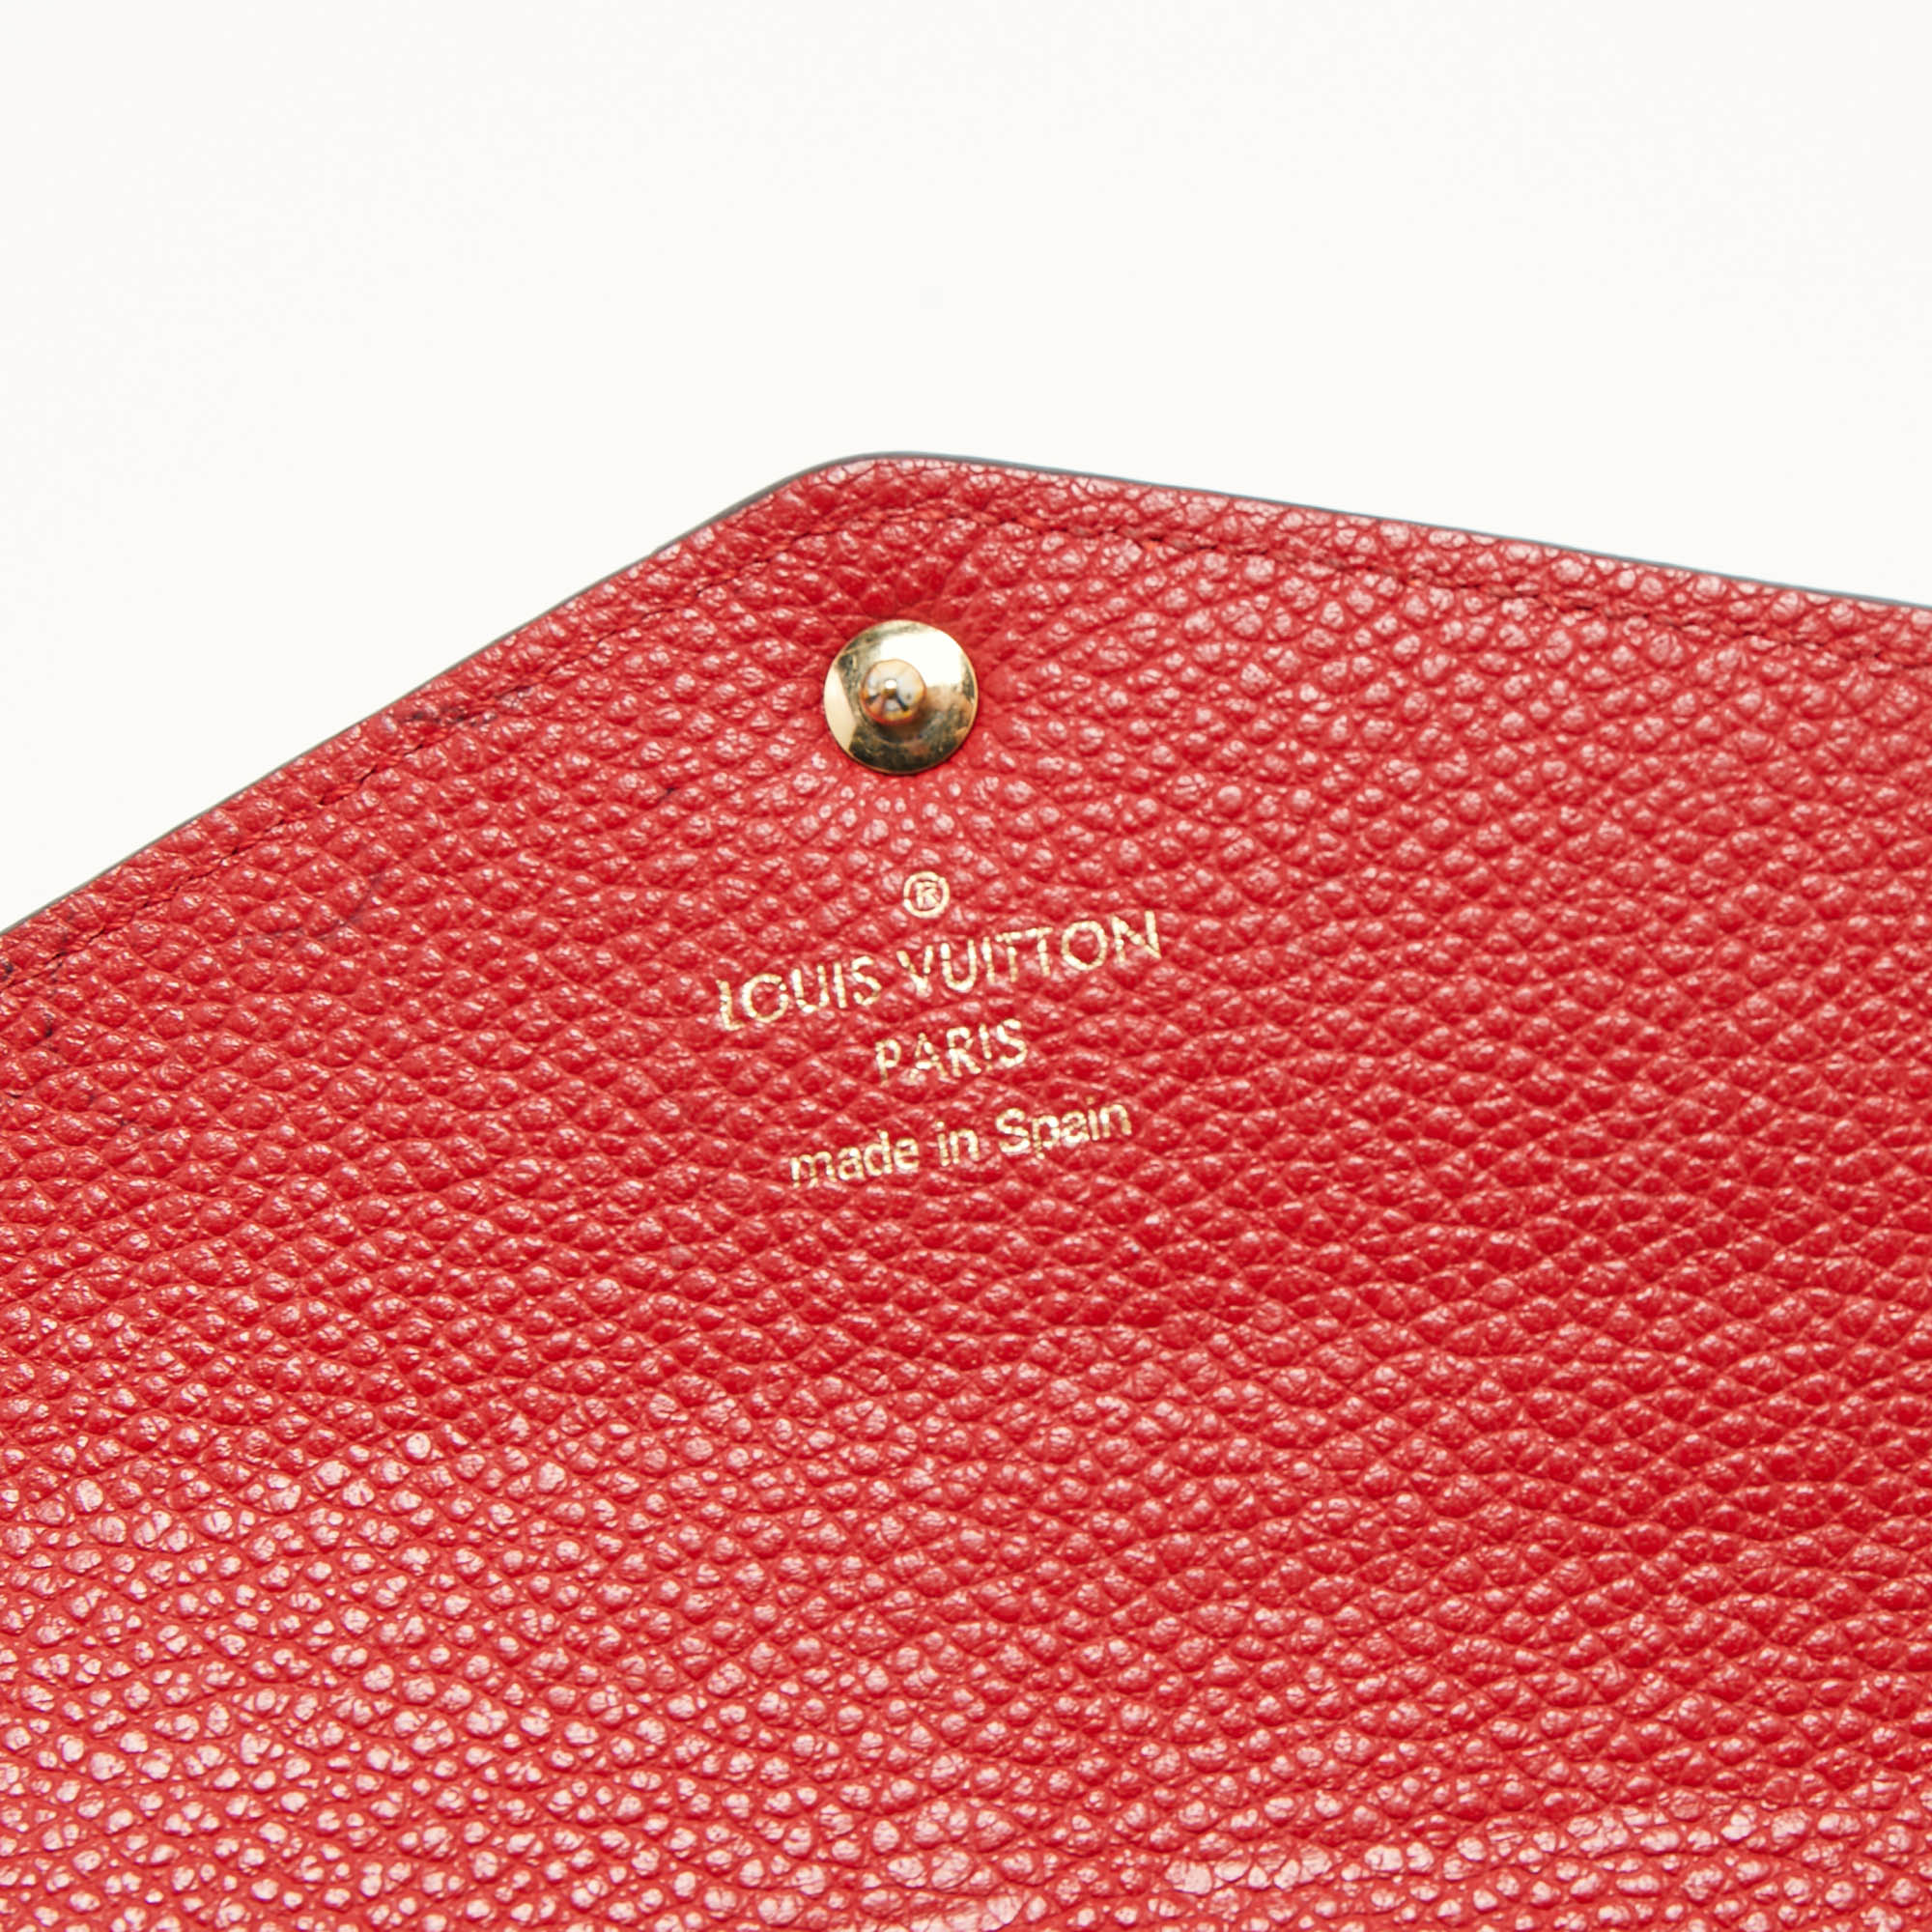 Louis Vuitton Red Monogram Empreinte Leather Sarah Wallet